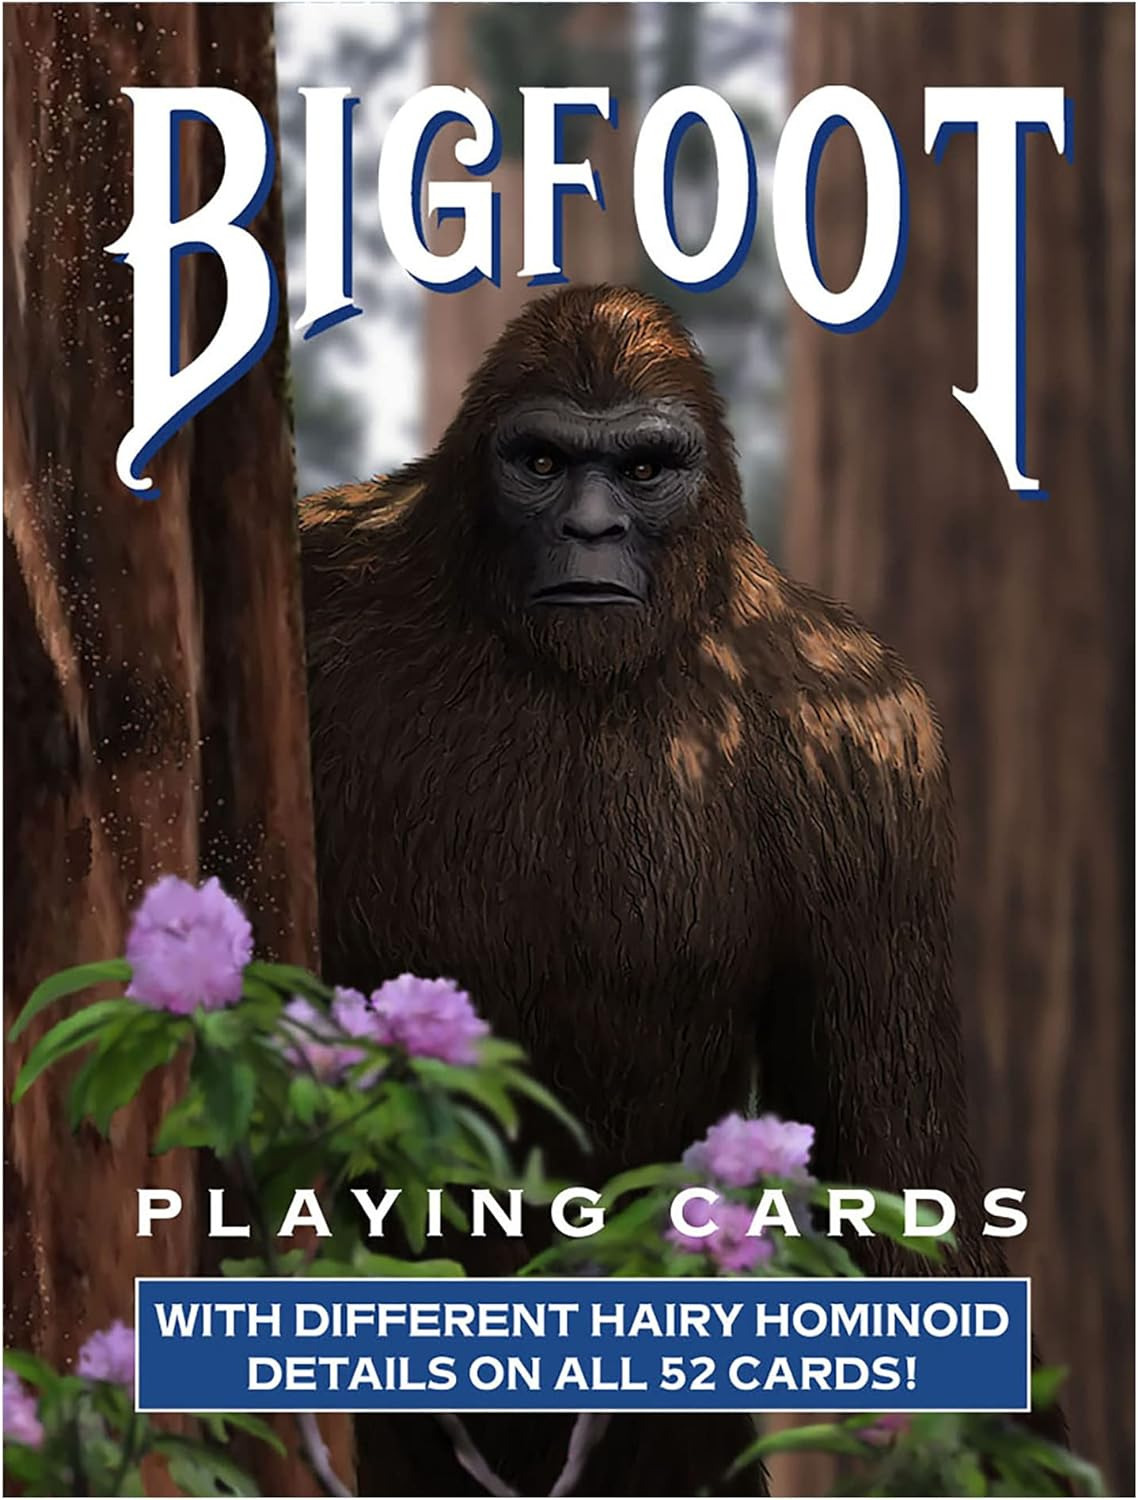 METALWORKS Bigfoot Playing Cards - Standard 52 Card Deck 